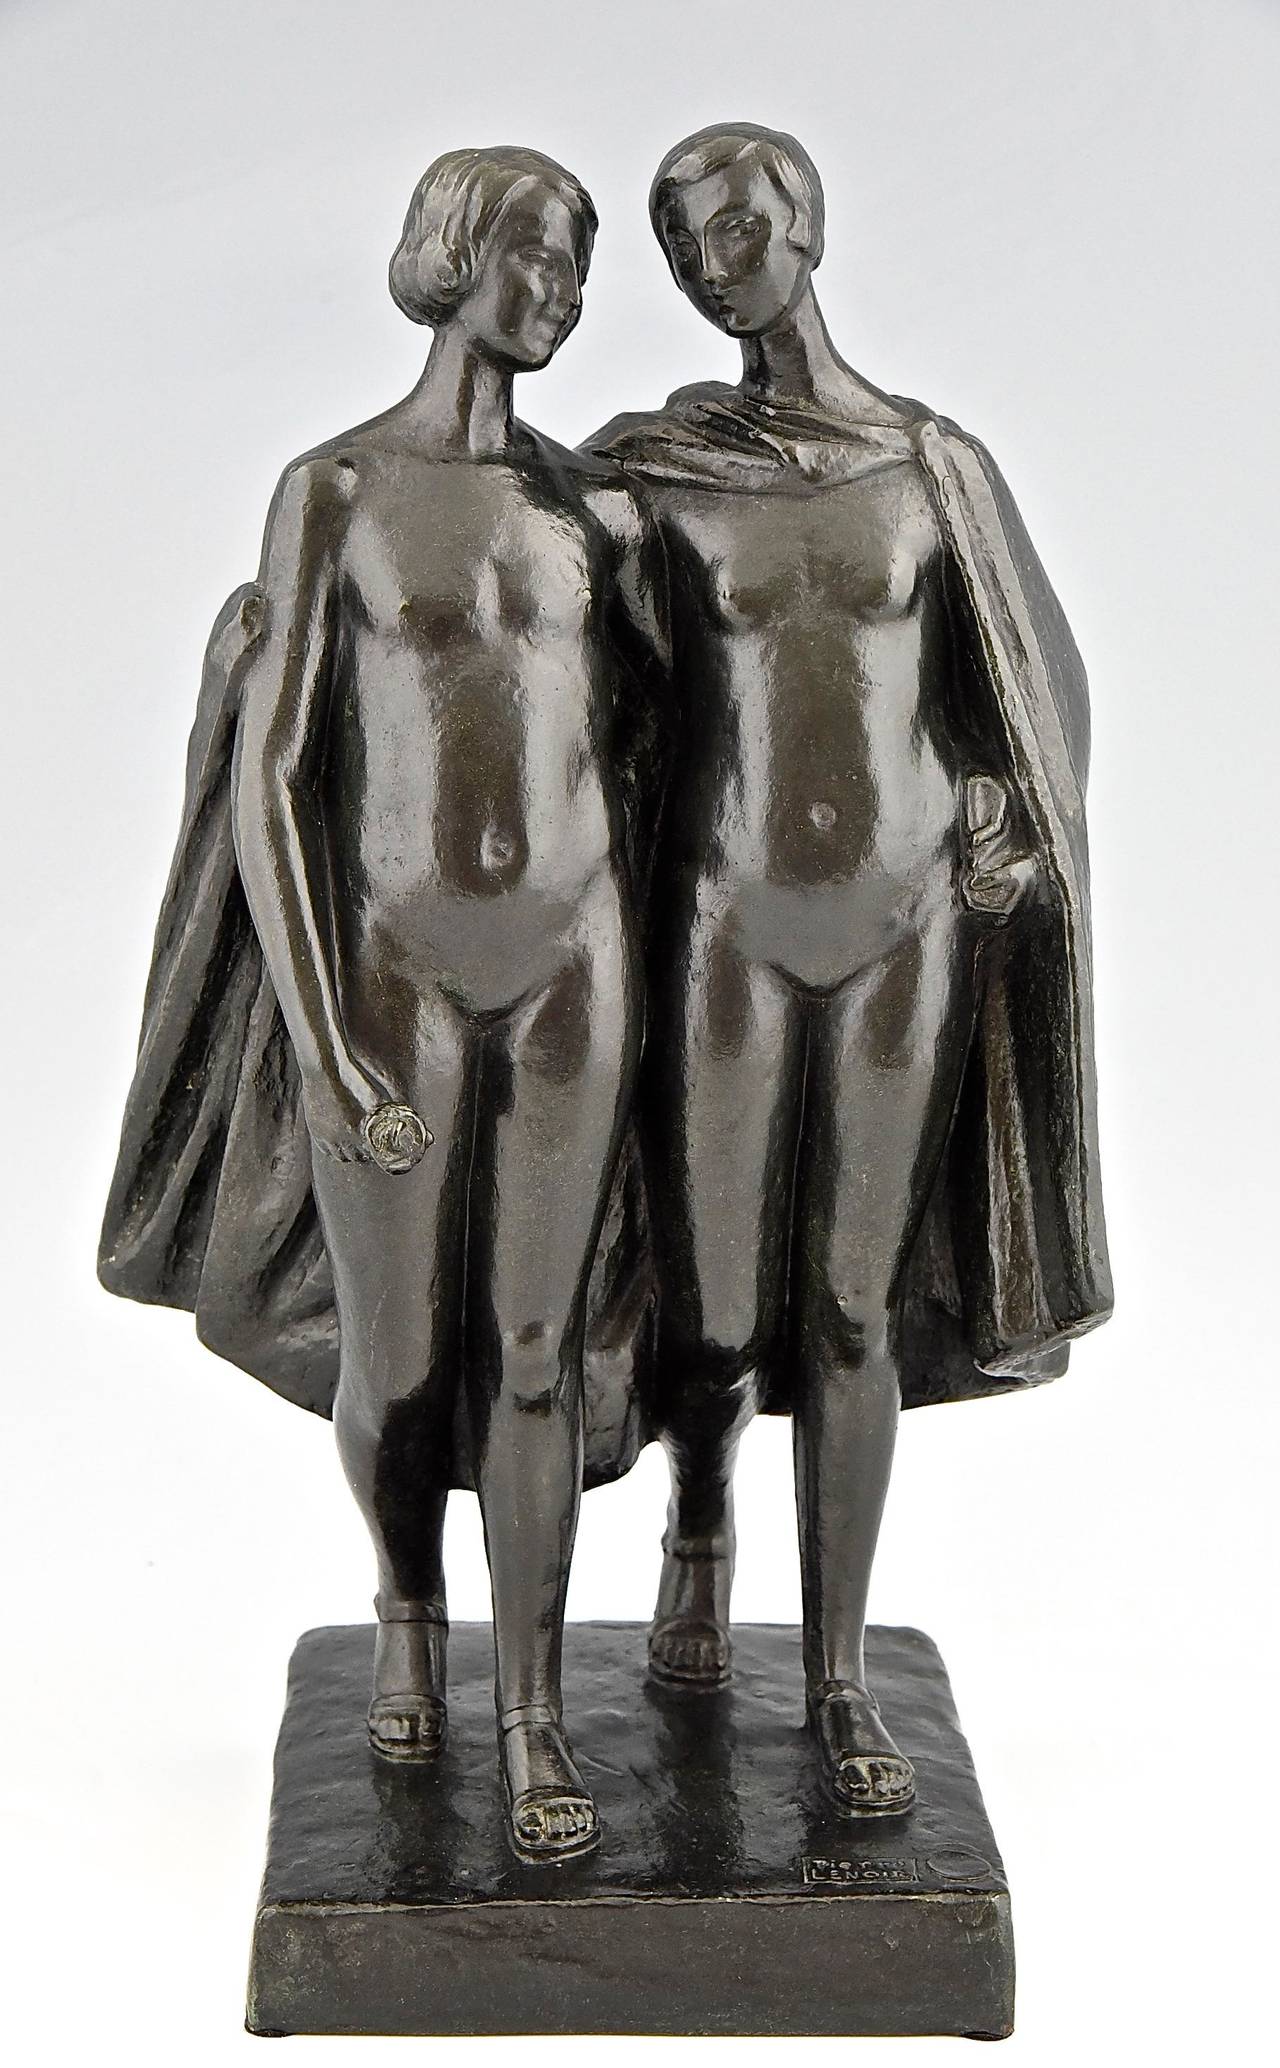 Art Deco bronze sculpture of two nudes by Pierre Lenoir.
Signature and marks: 
Pierre Lenoir, Foundry seal Meroni Radice, Cire perdue, Paris. 
Style: Art Deco. 
Date: 1925-1930.

Material: Patinated bronze.
Origin: France.
Size:
H 15.3 inch